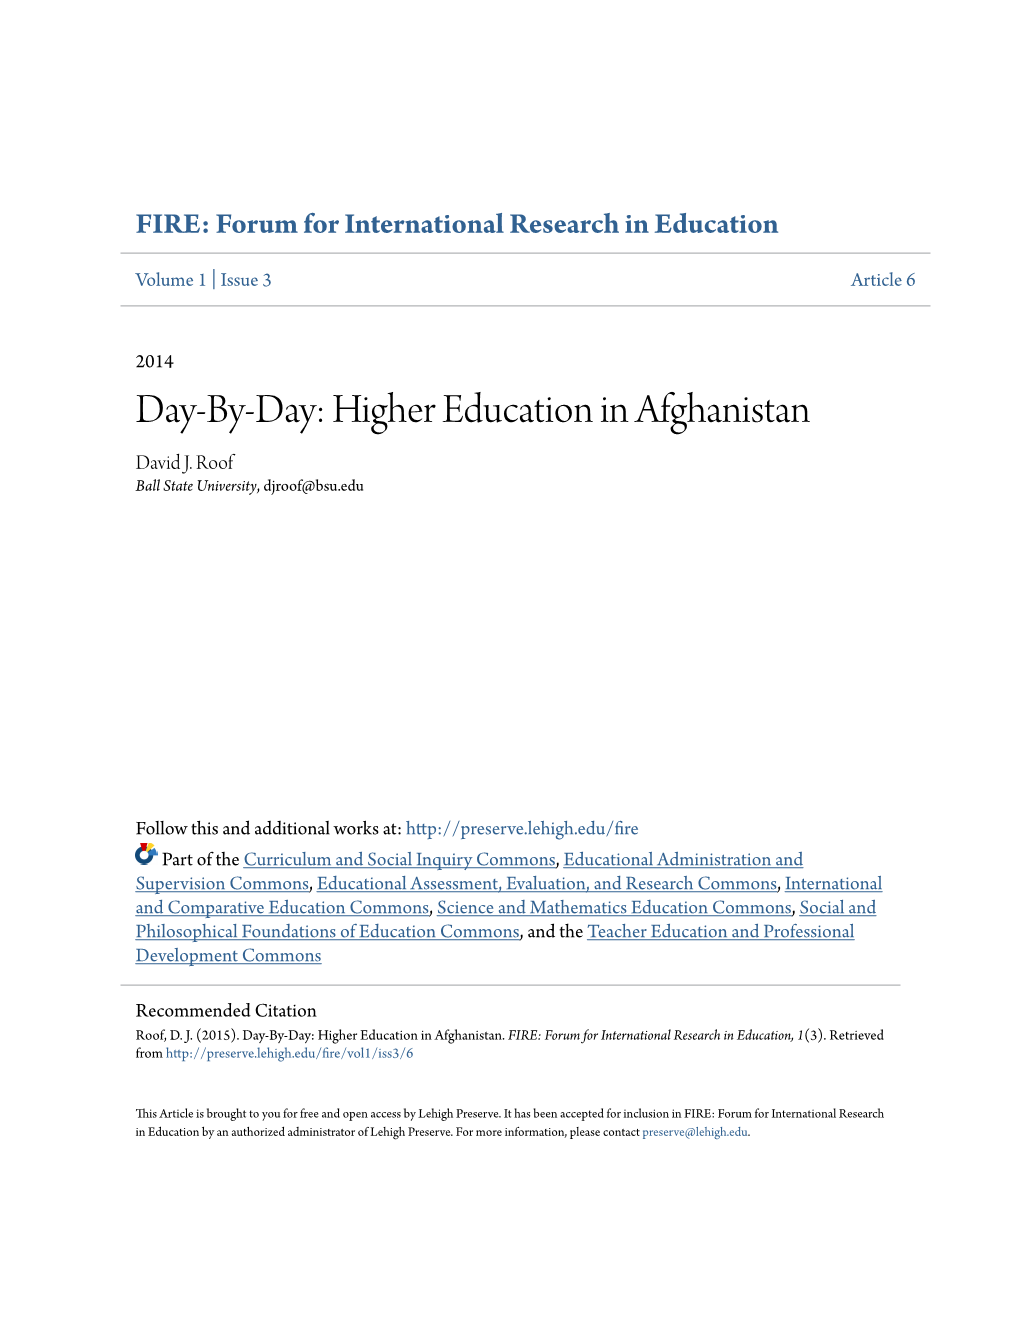 Higher Education in Afghanistan David J